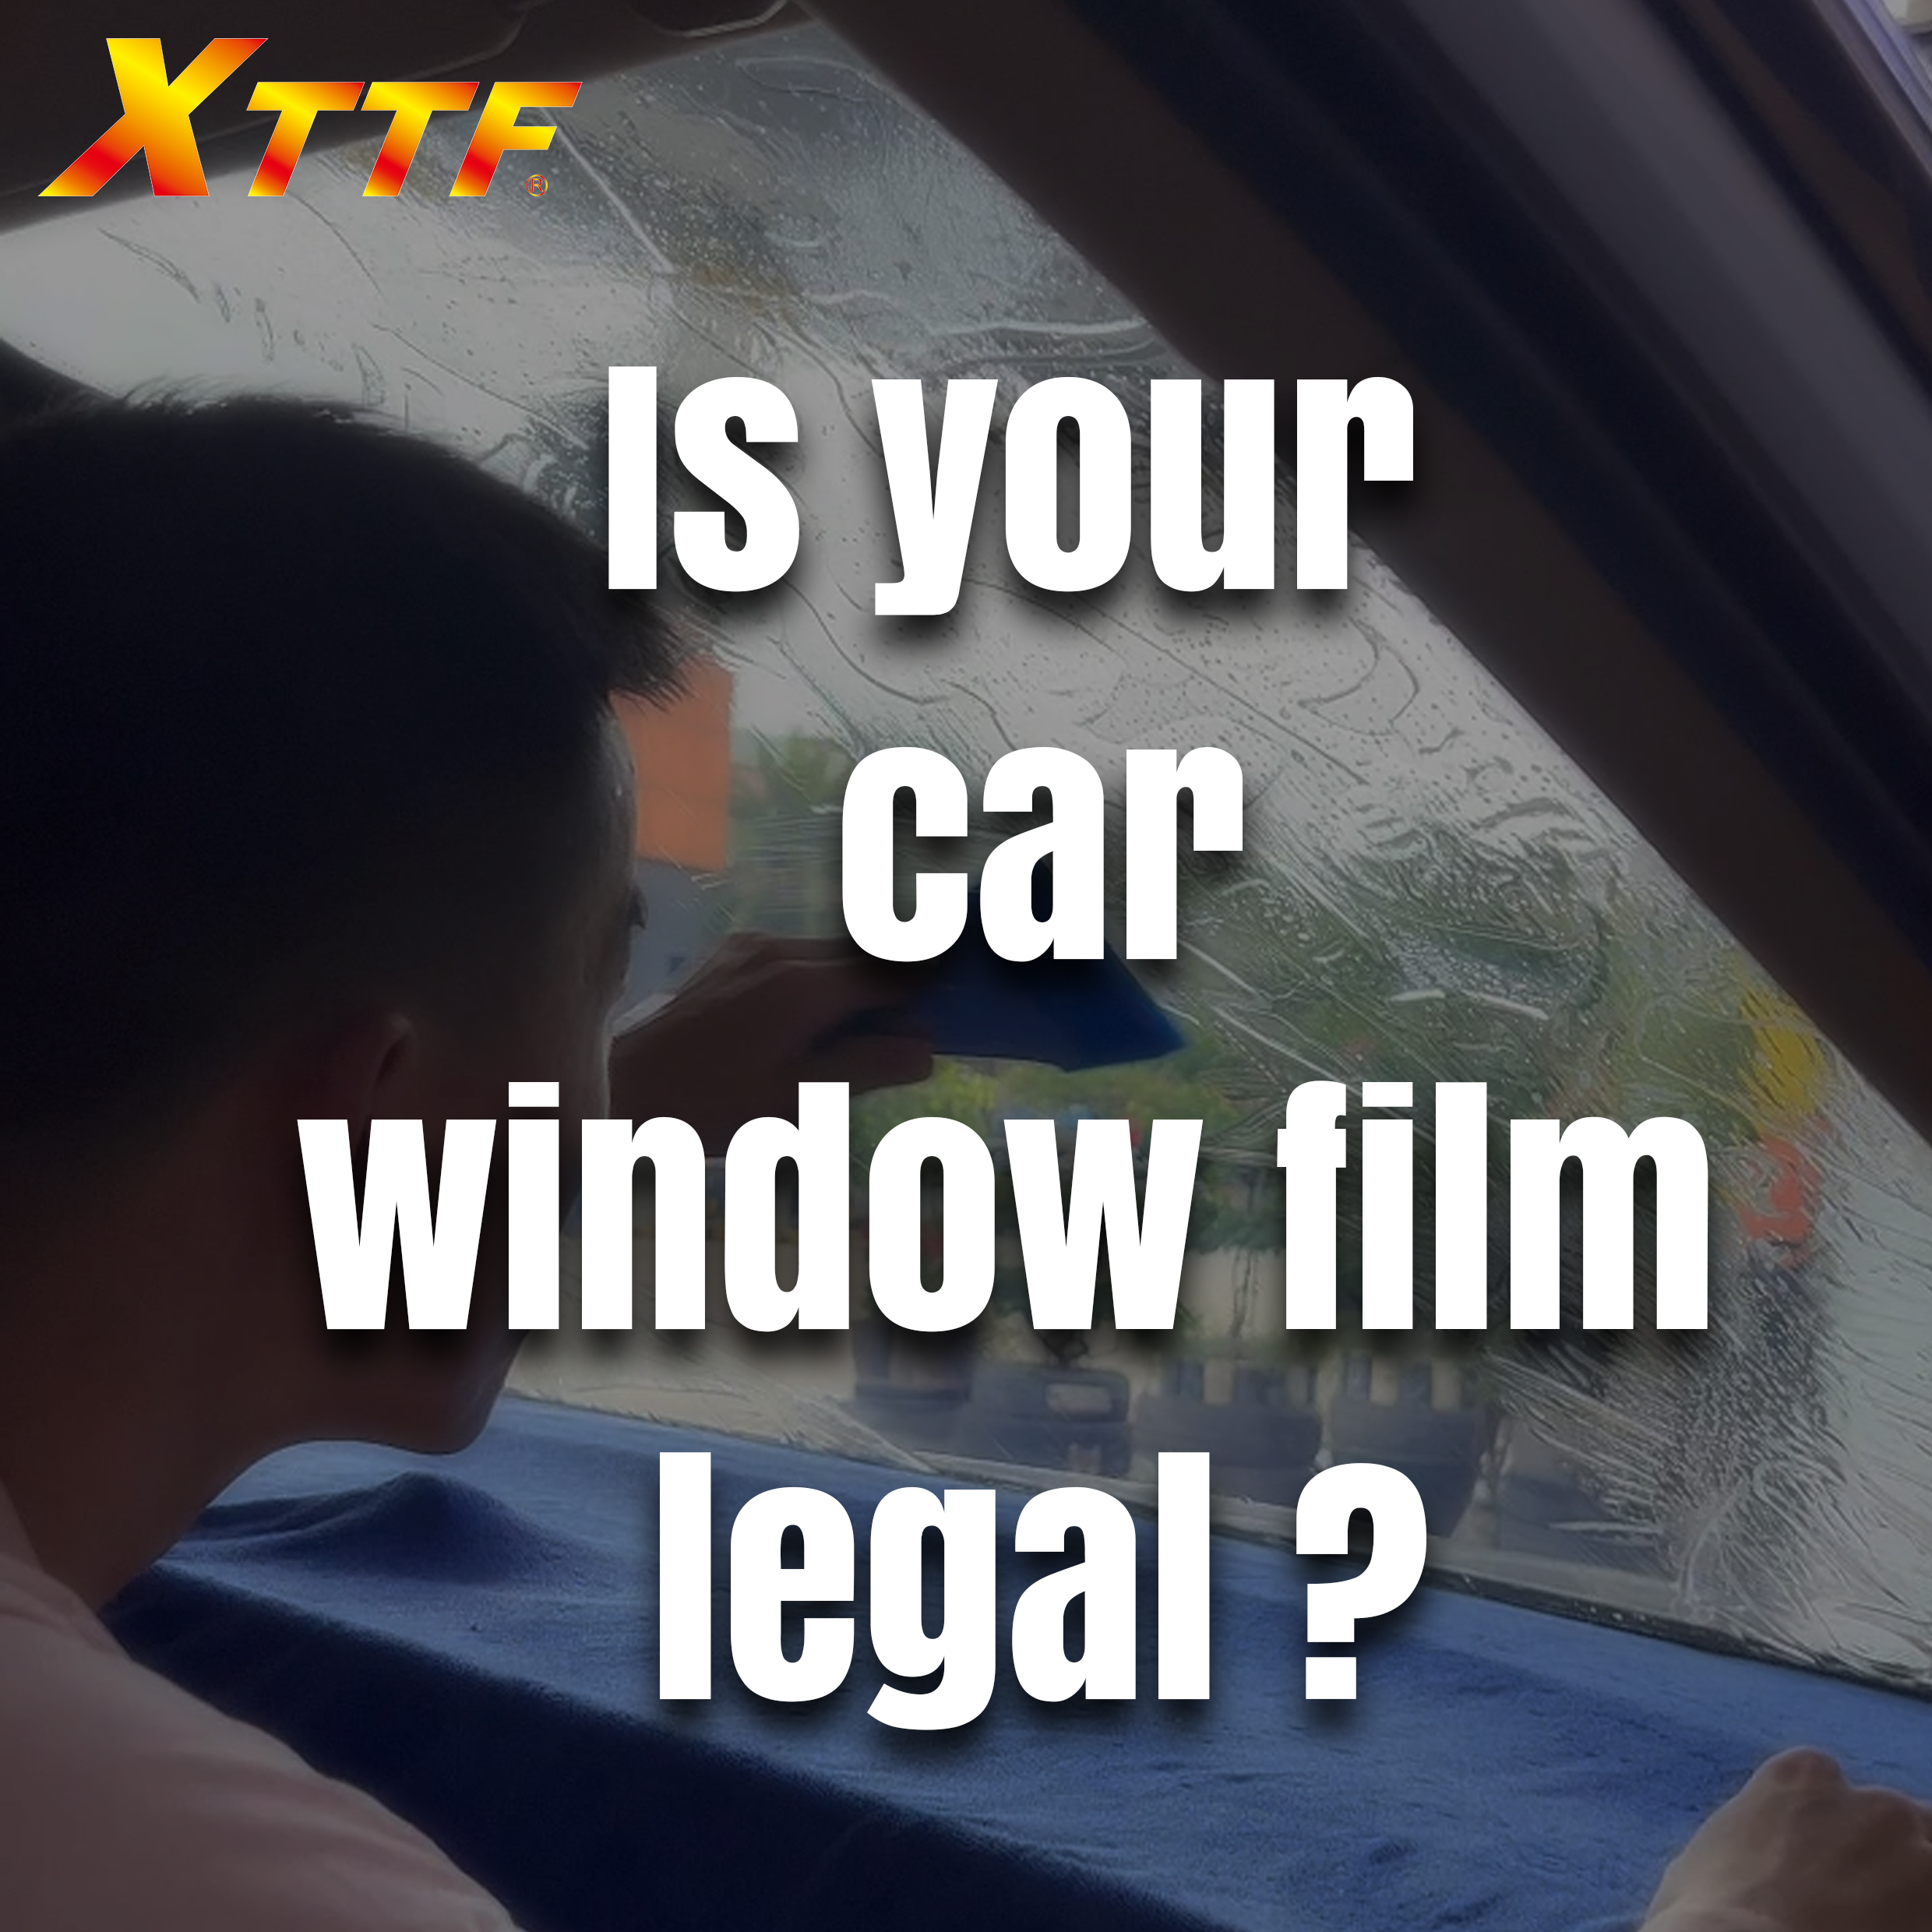 तुमची कार विंडो फिल्म कायदेशीर आहे का?